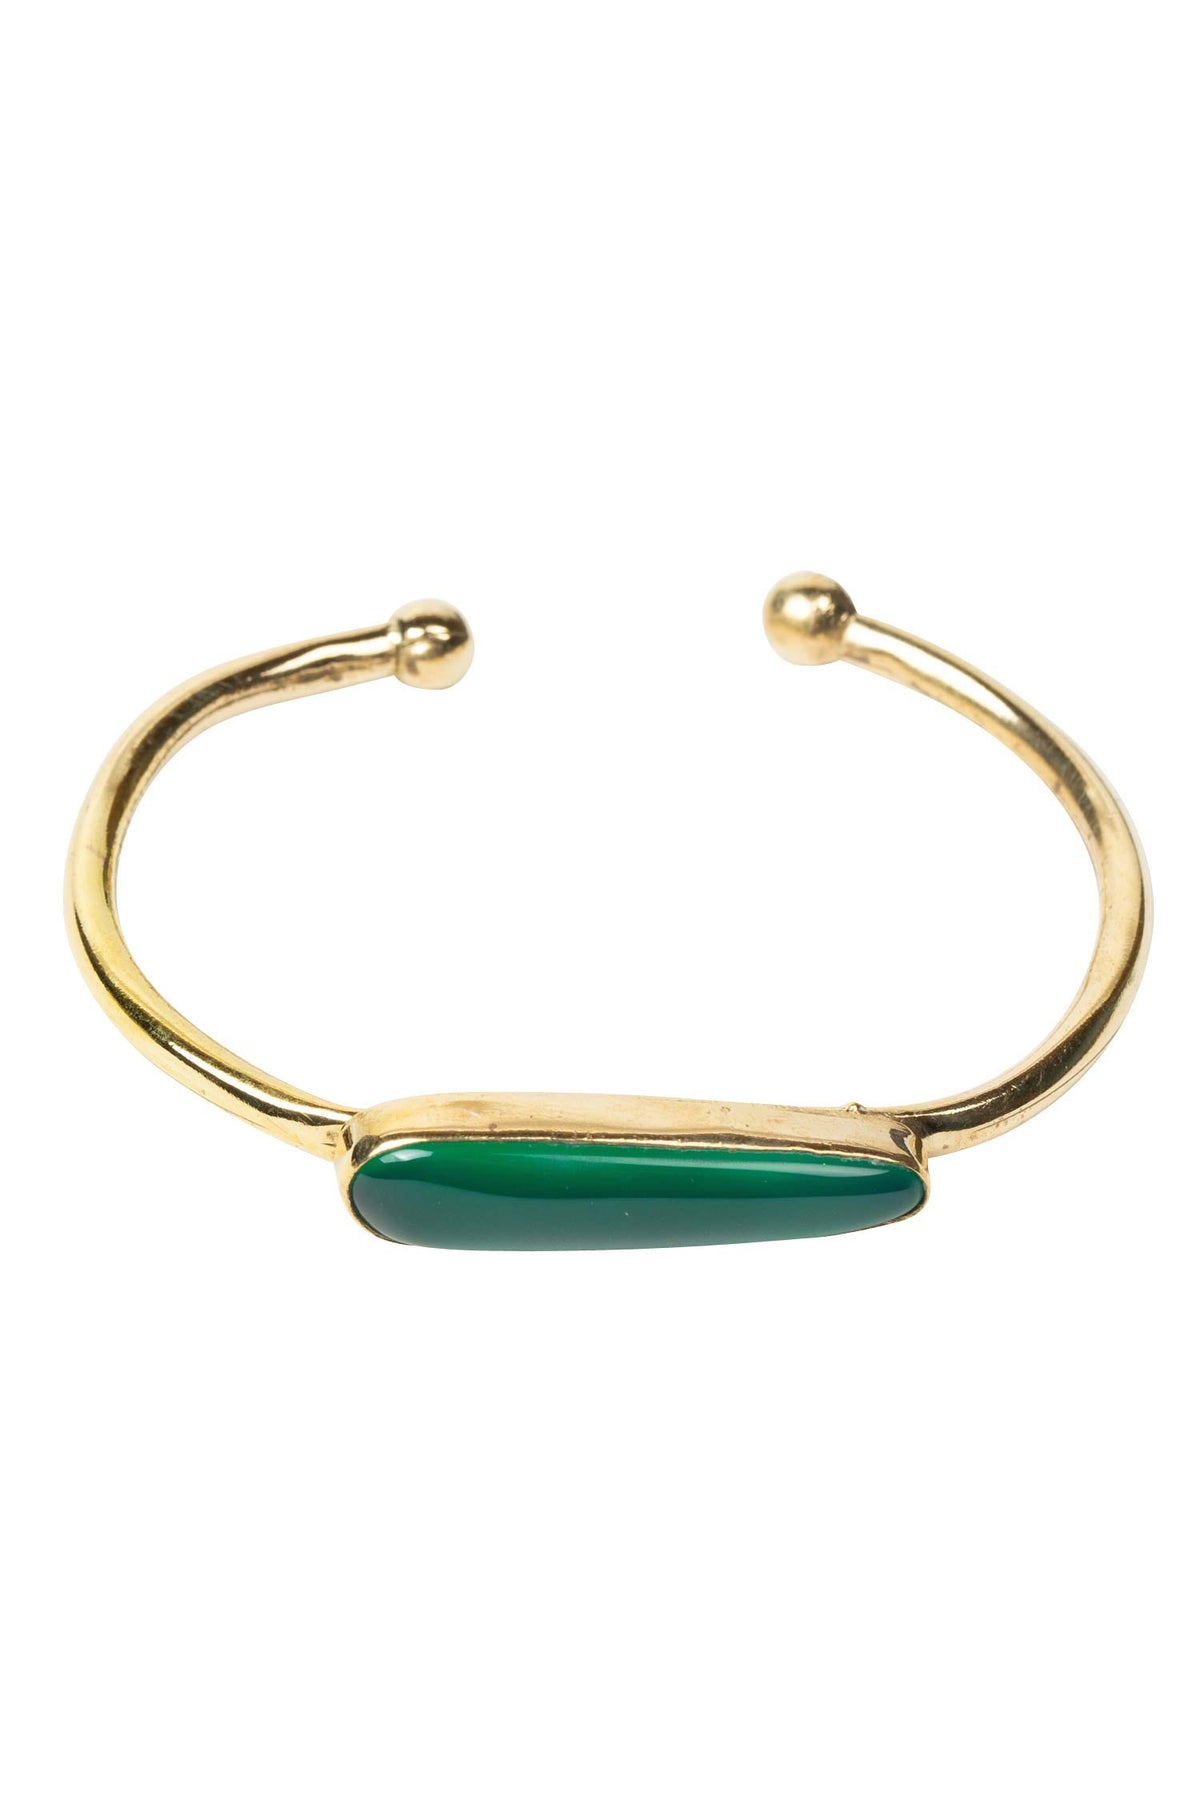 Bijoux Spiritual Beads Bracelet in Sterling Silver with Green Onyx  B17048  SSBGOM